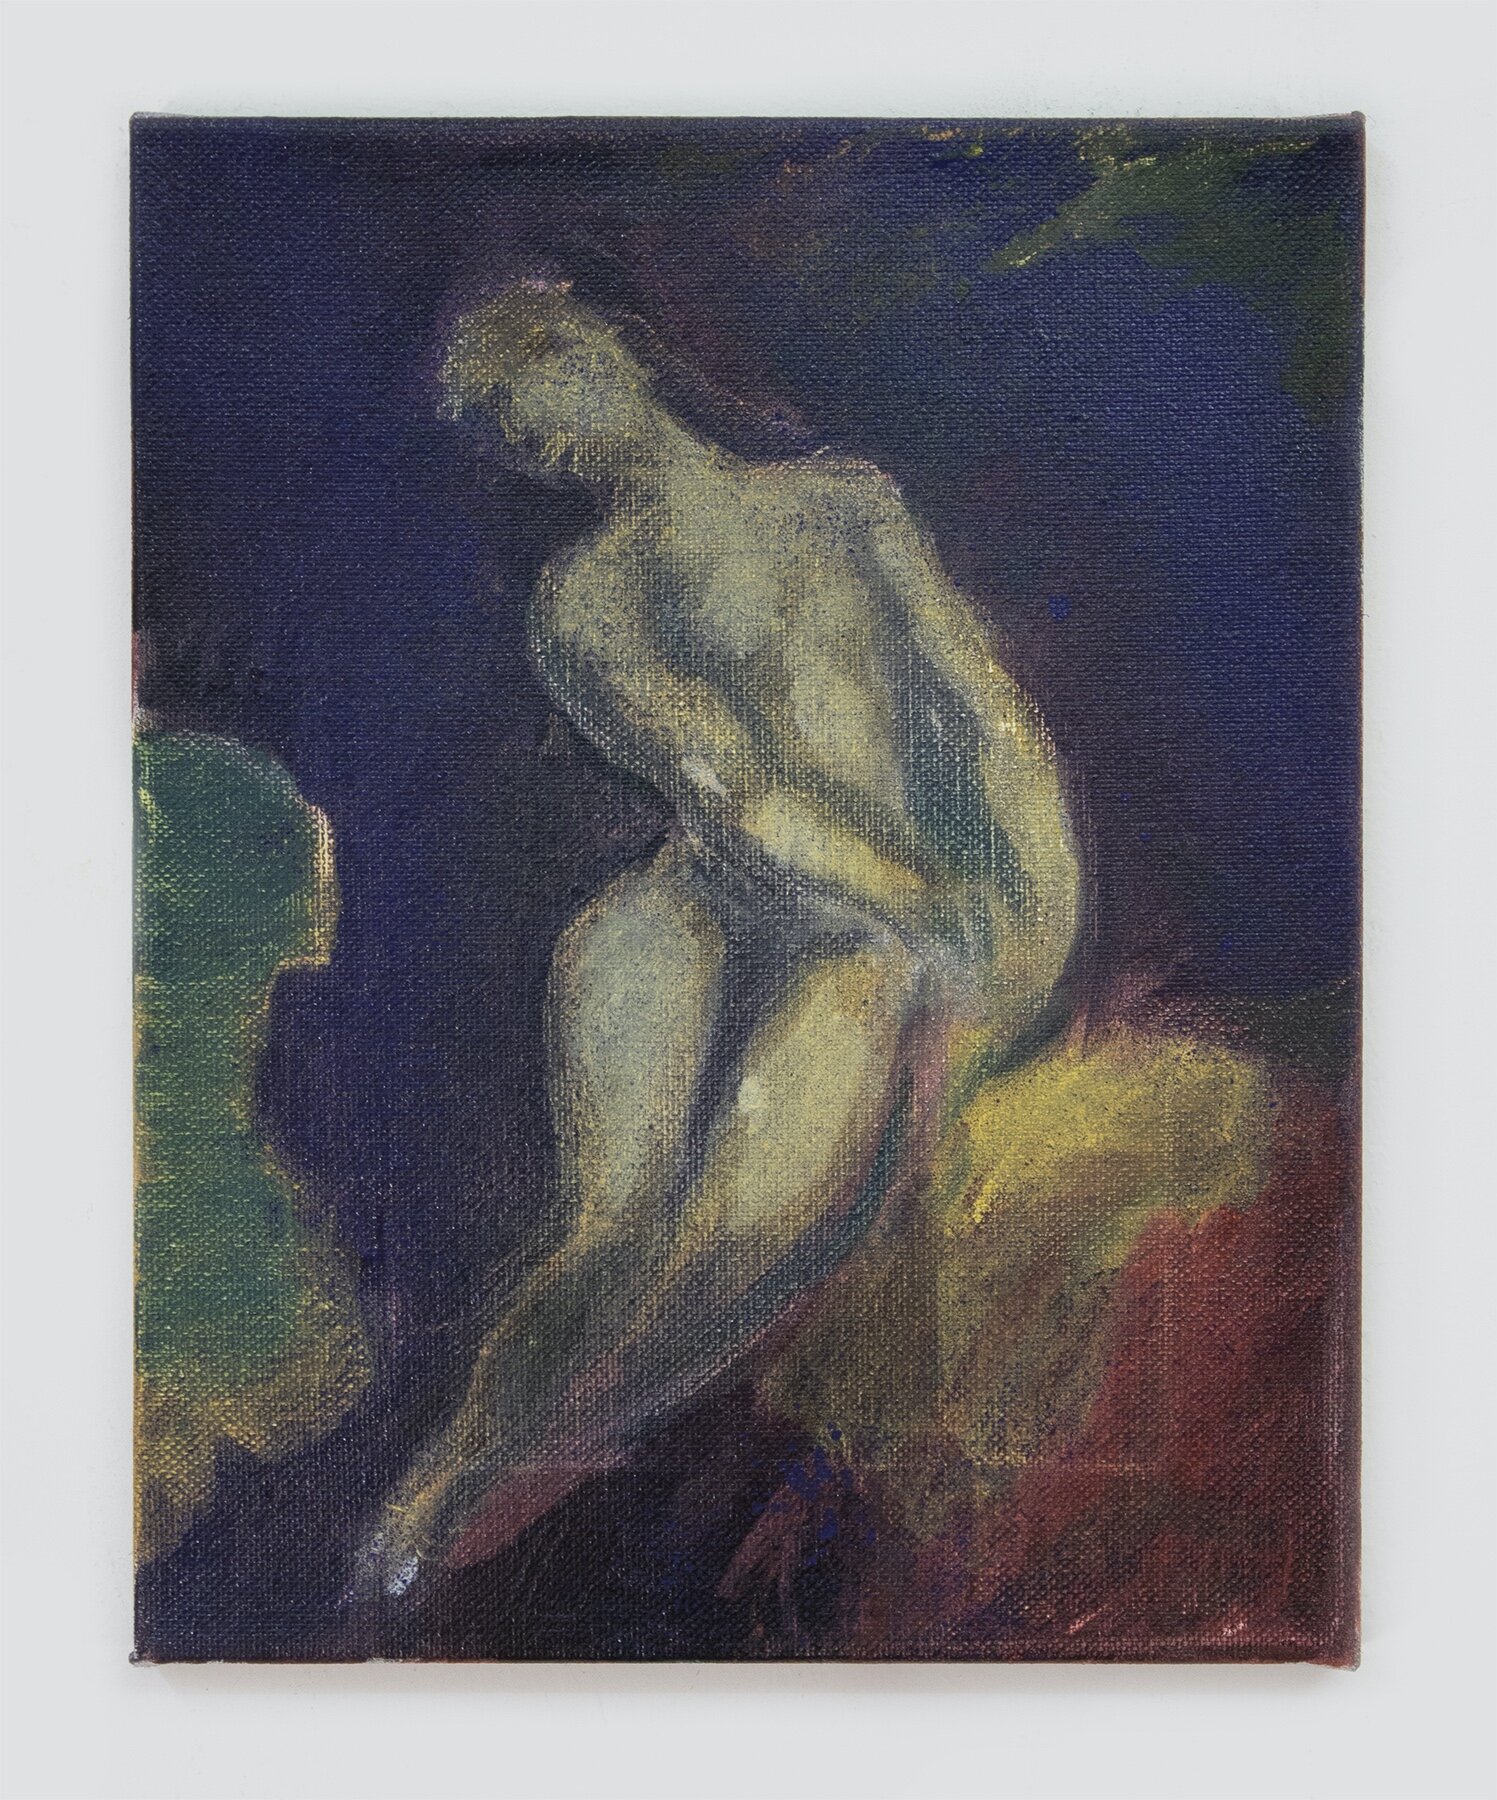 Andromède (After Delacroix), 2019